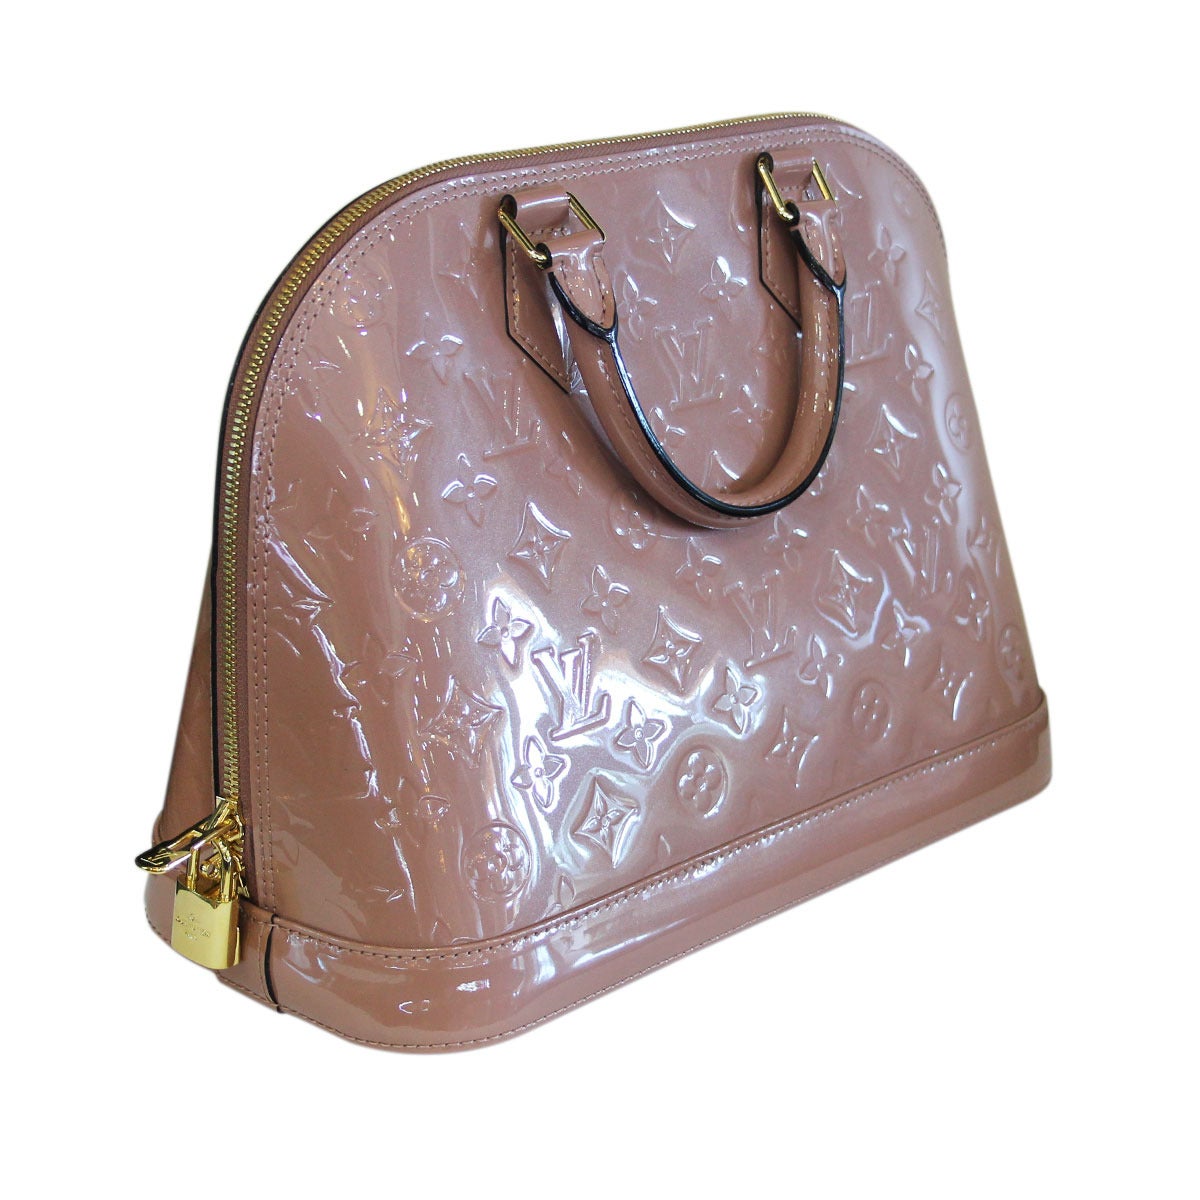 Louis Vuitton Rose Velours PM Vernis Alma Handbag Purse In Excellent Condition For Sale In Boca Raton, FL